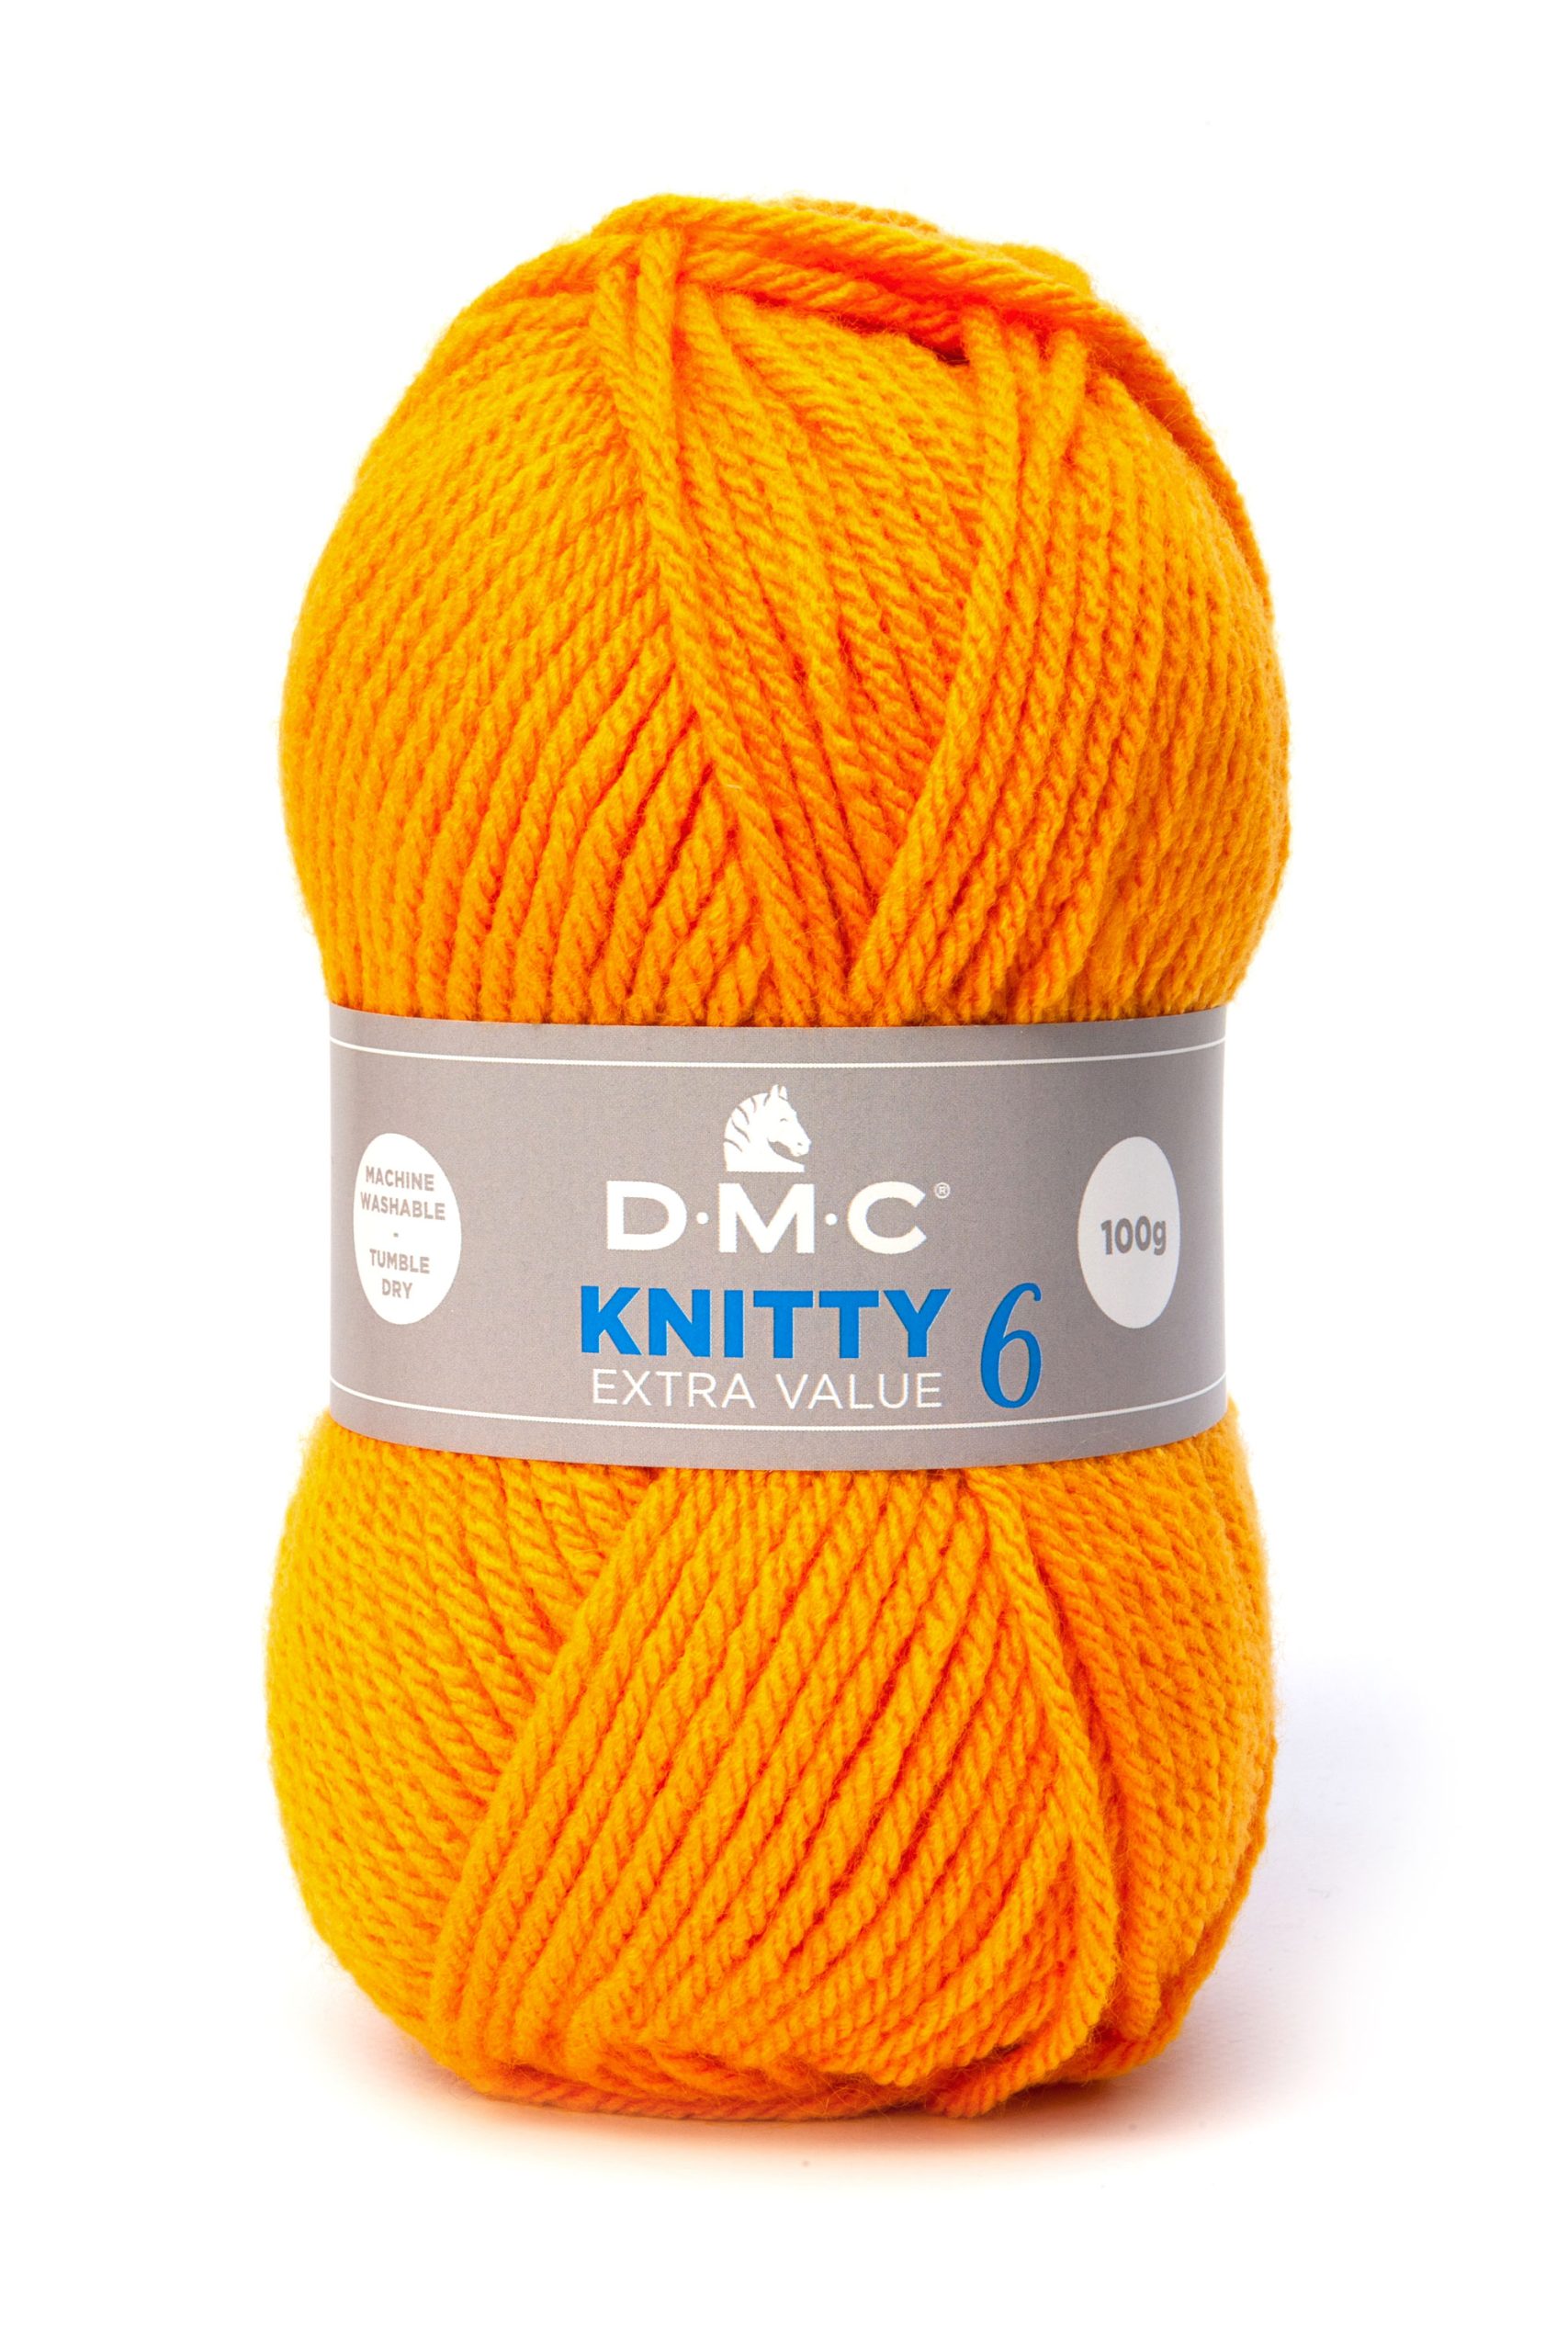 Lana Dmc Knitty 6 Colore 623